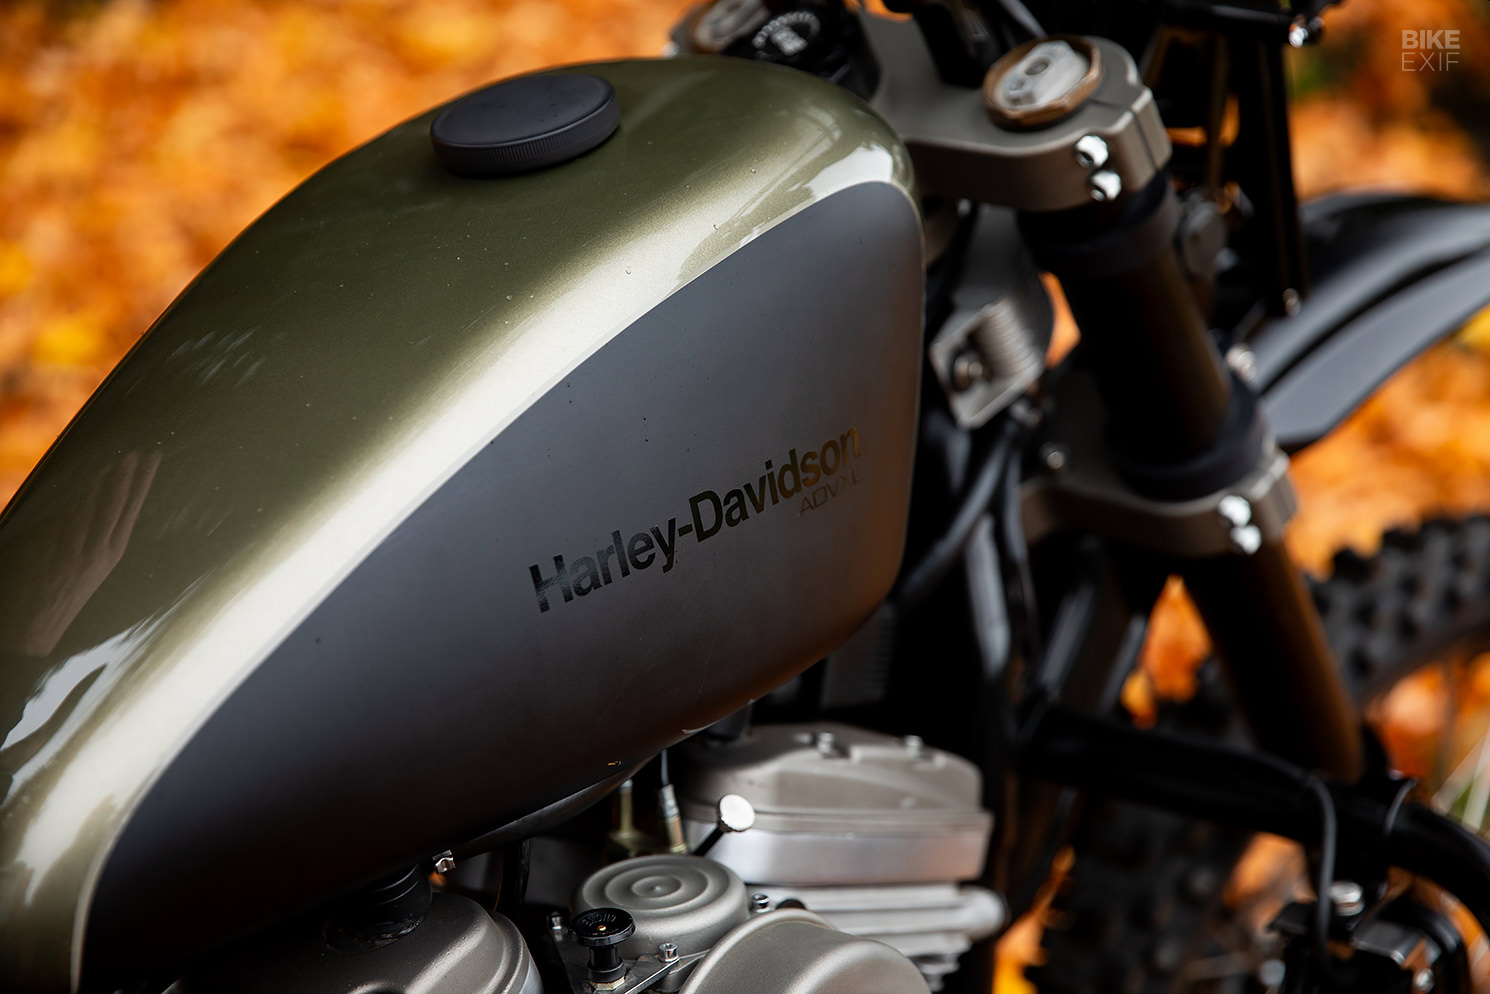 The ADVXL: Biltwell's Harley Sportster adventure bike